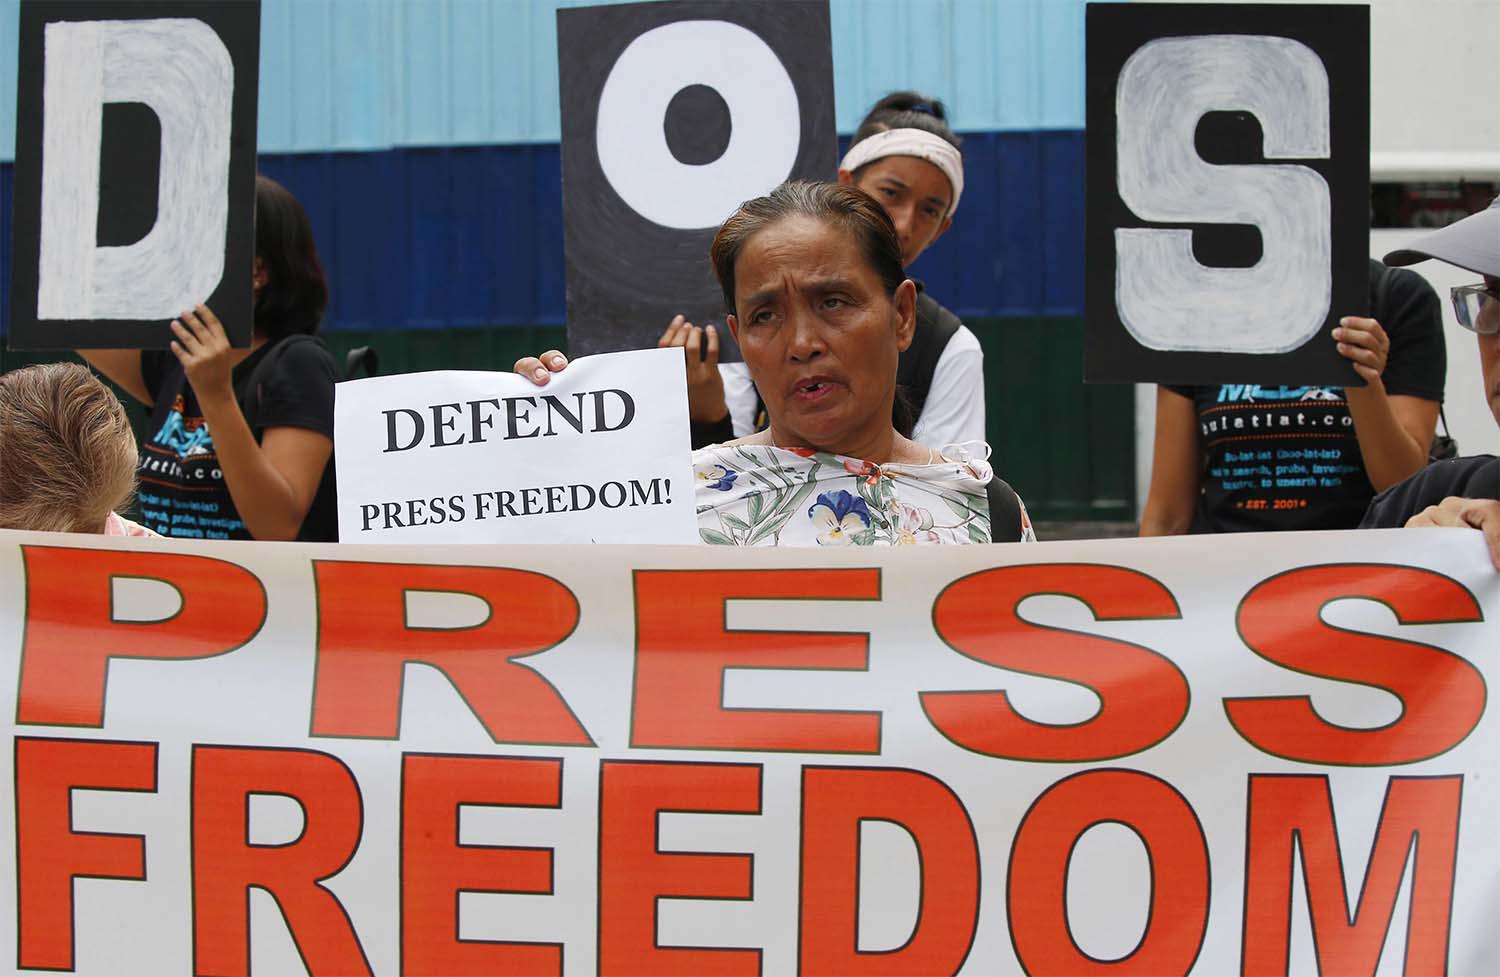 Press freedom banner